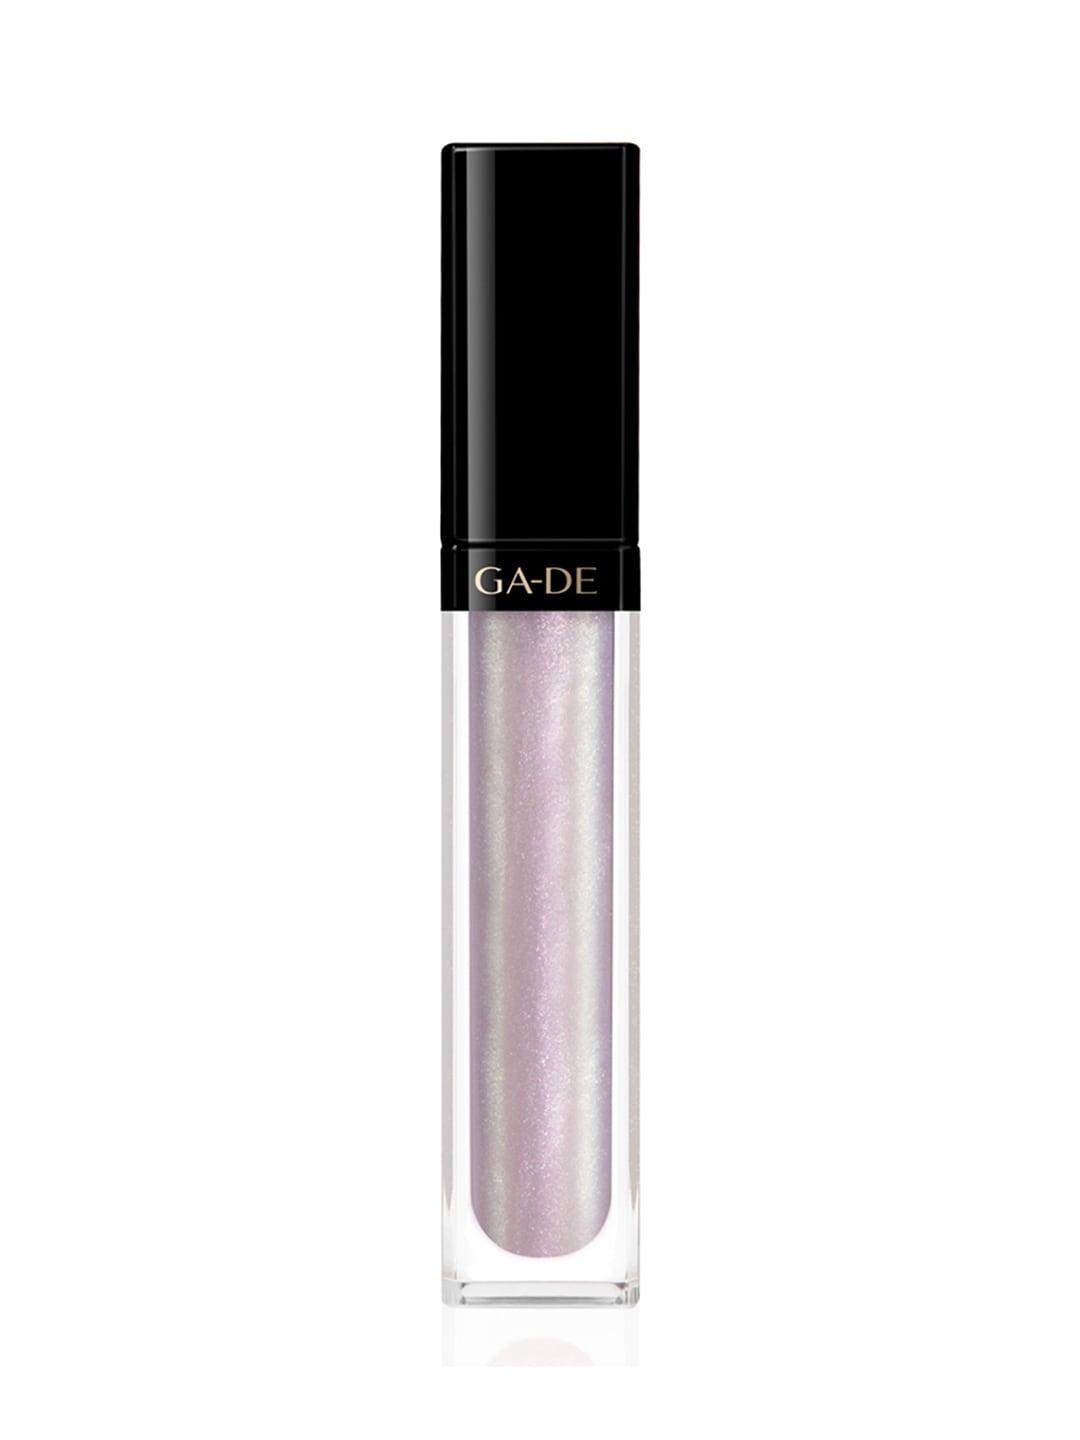 ga-de long lasting & moisturizing crystal lights lip gloss 6ml - pure light 818